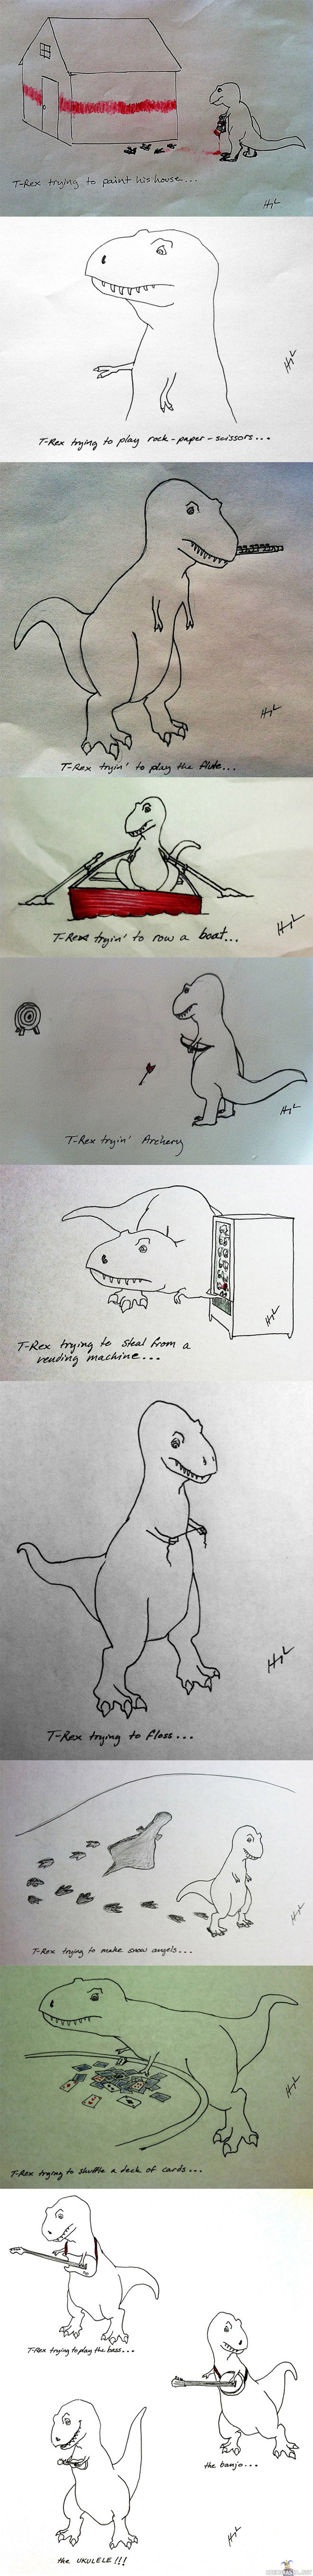 T-Rex - T-Rex trying things